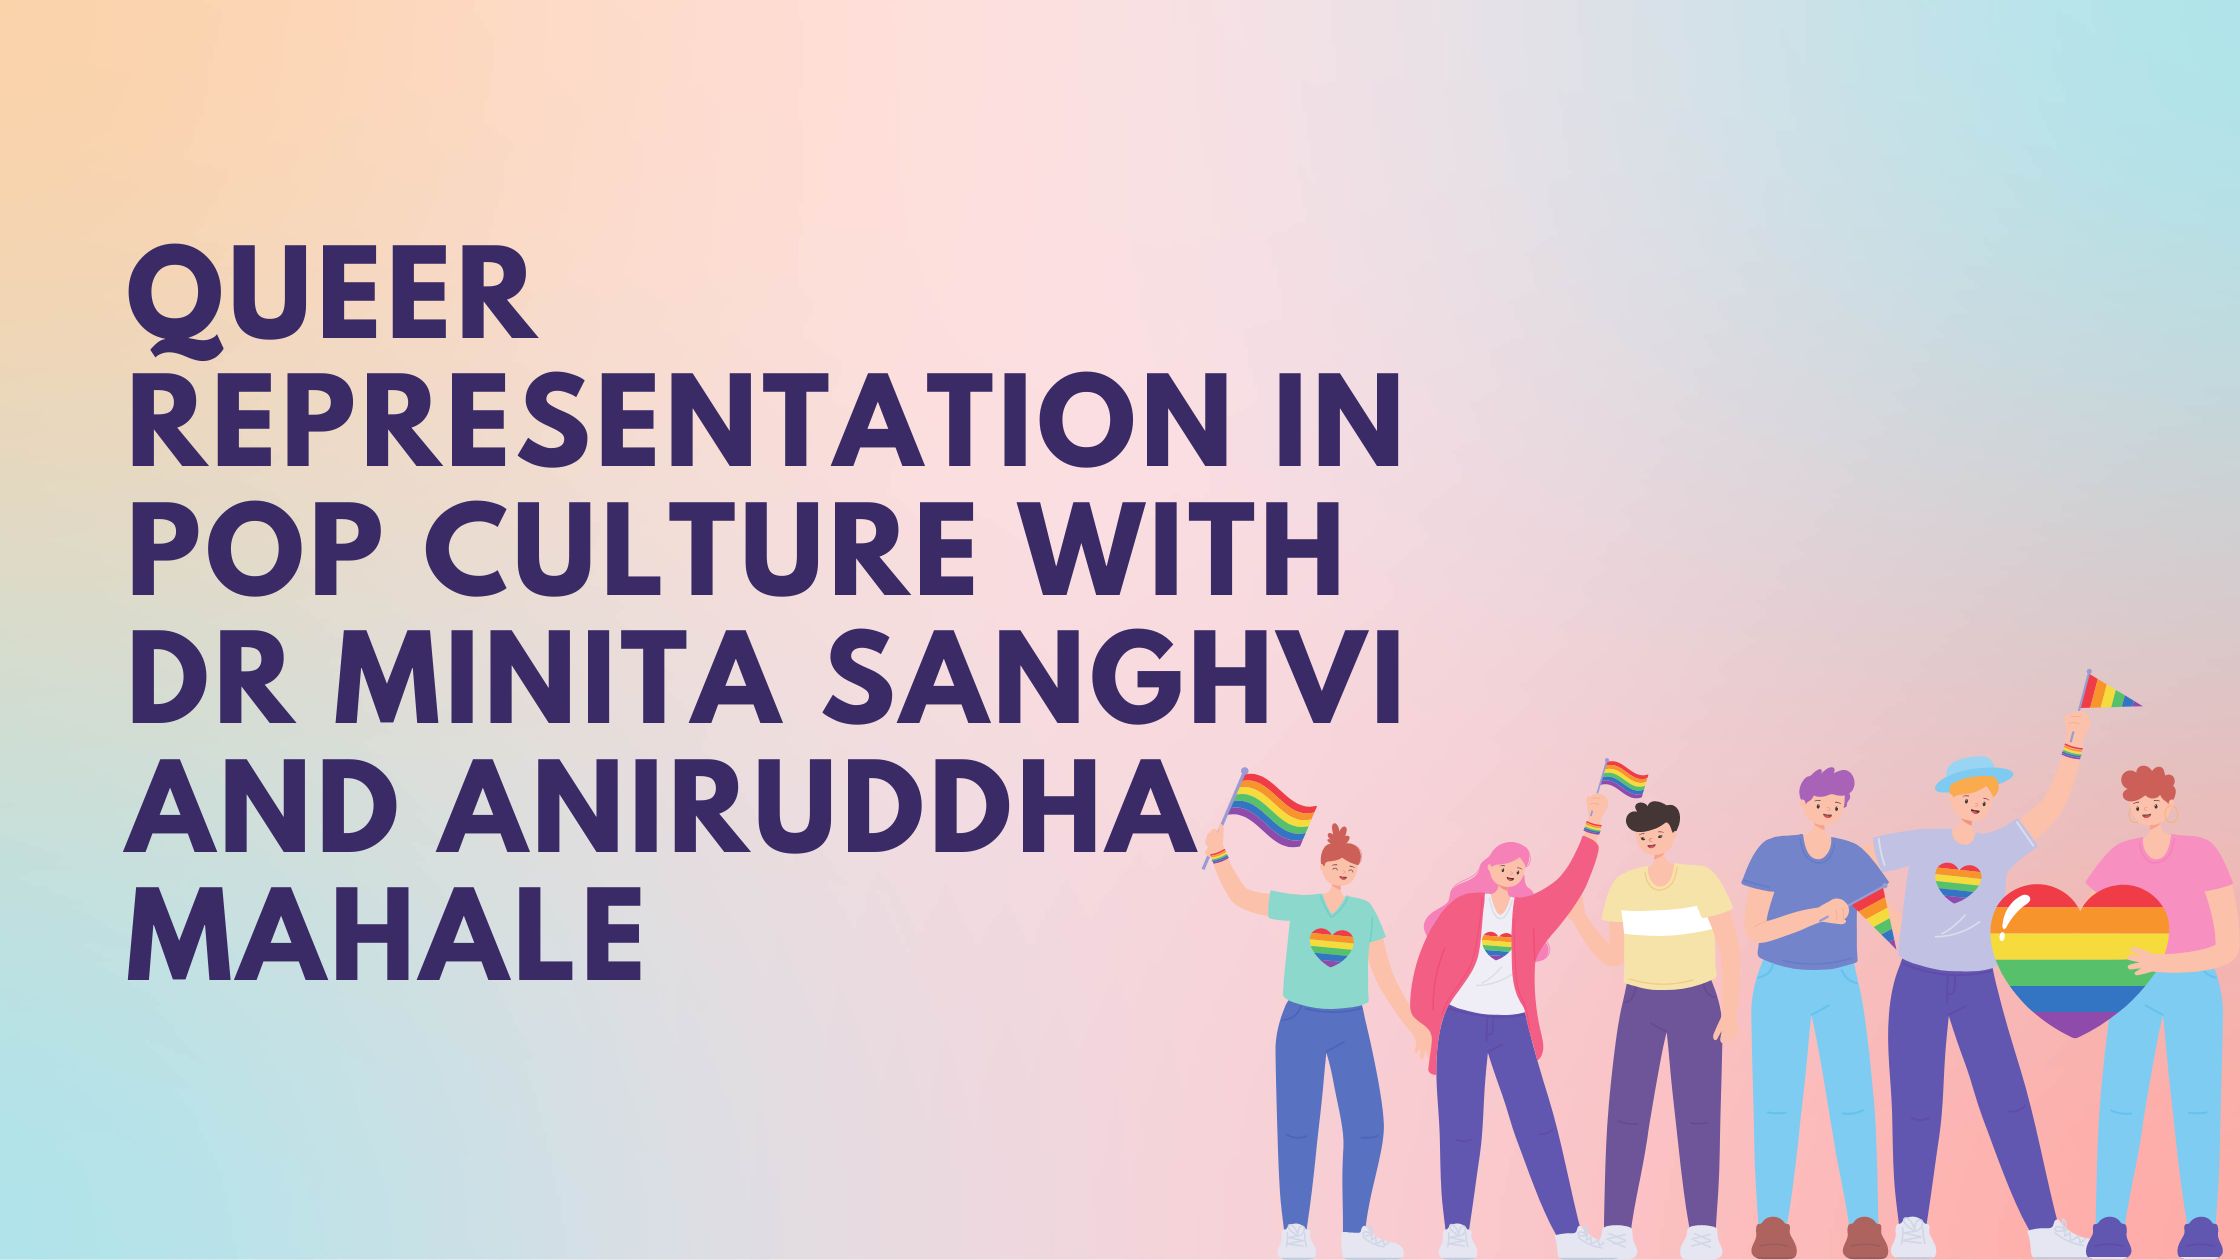 Queer Representation in pop culture with Dr Minita Sanghvi and Aniruddha Mahale